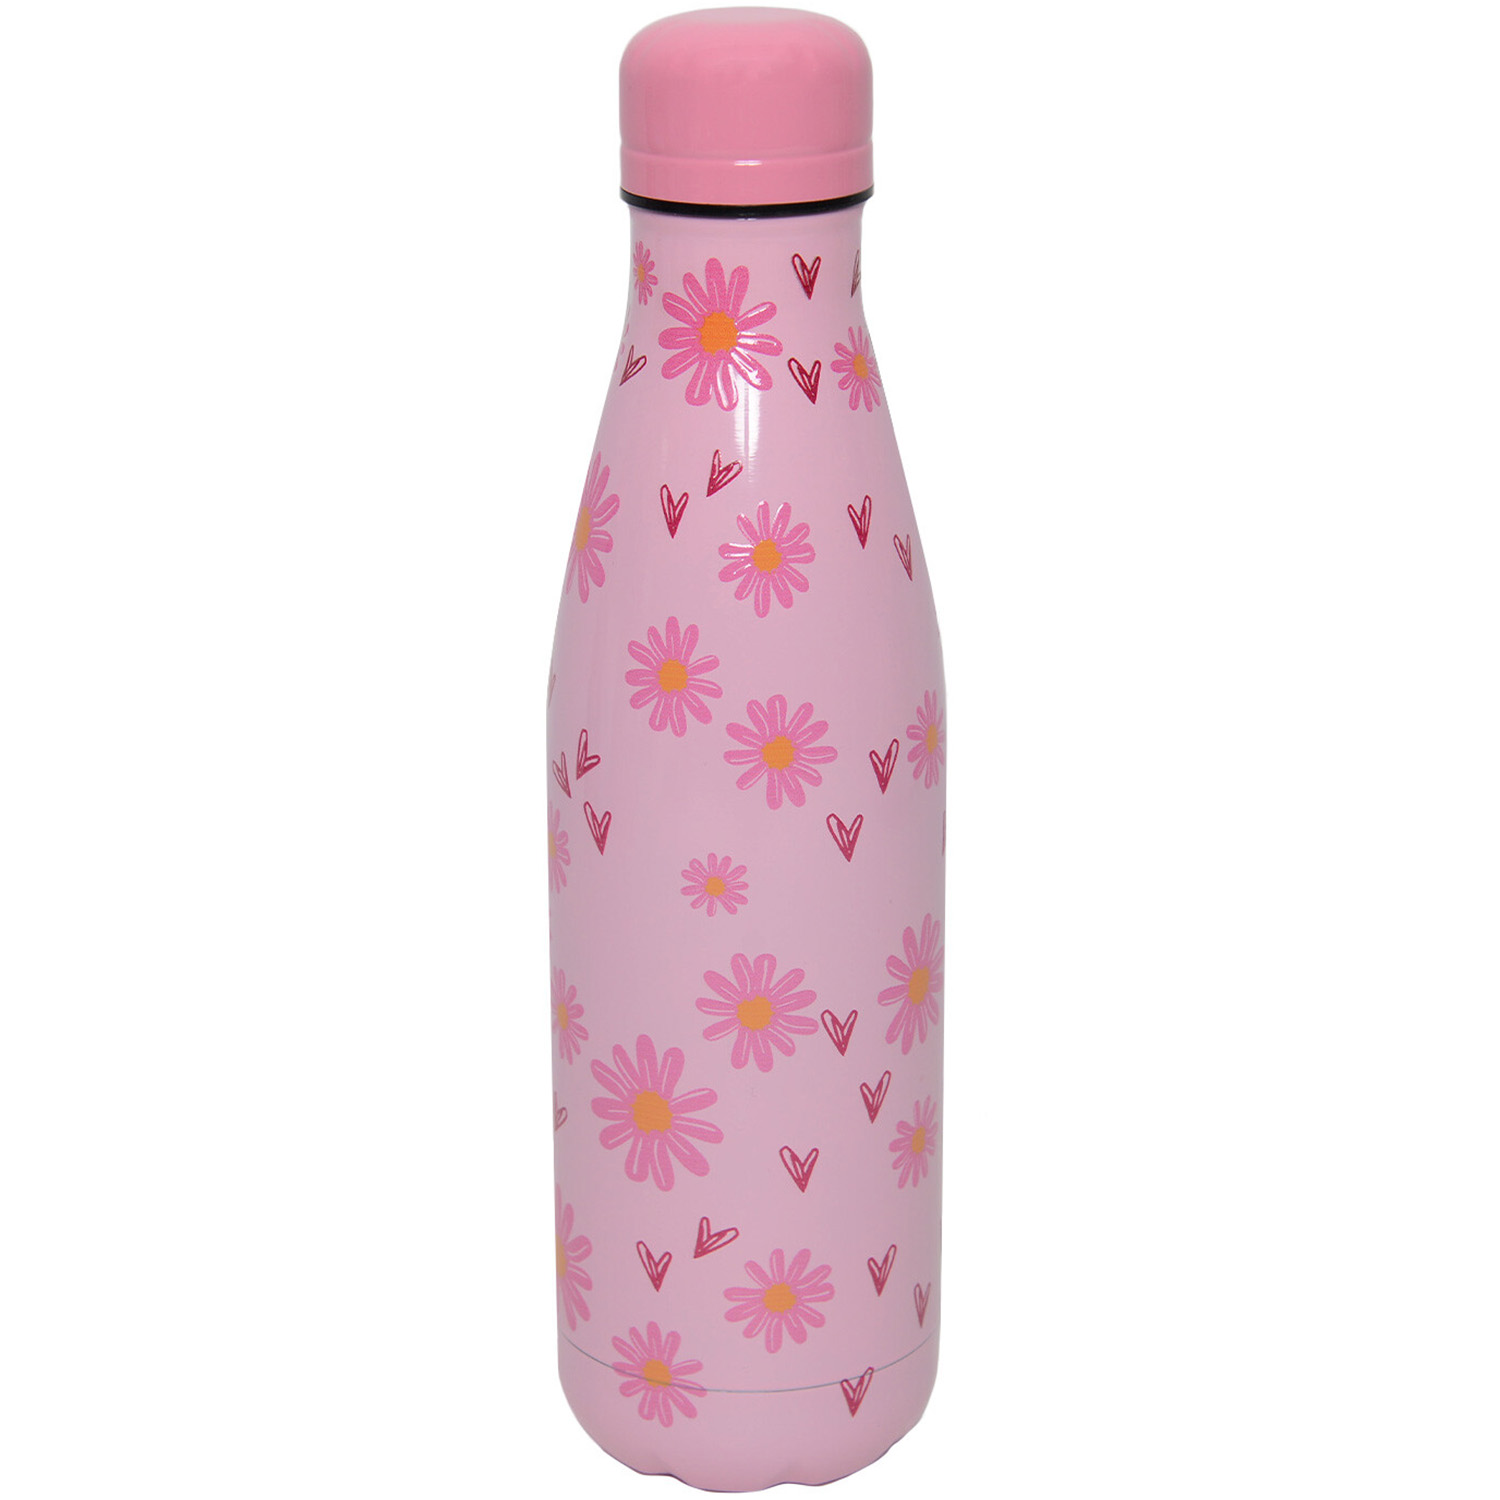 Daisy Daze Stainless Steel Bottle - Pink Image 1